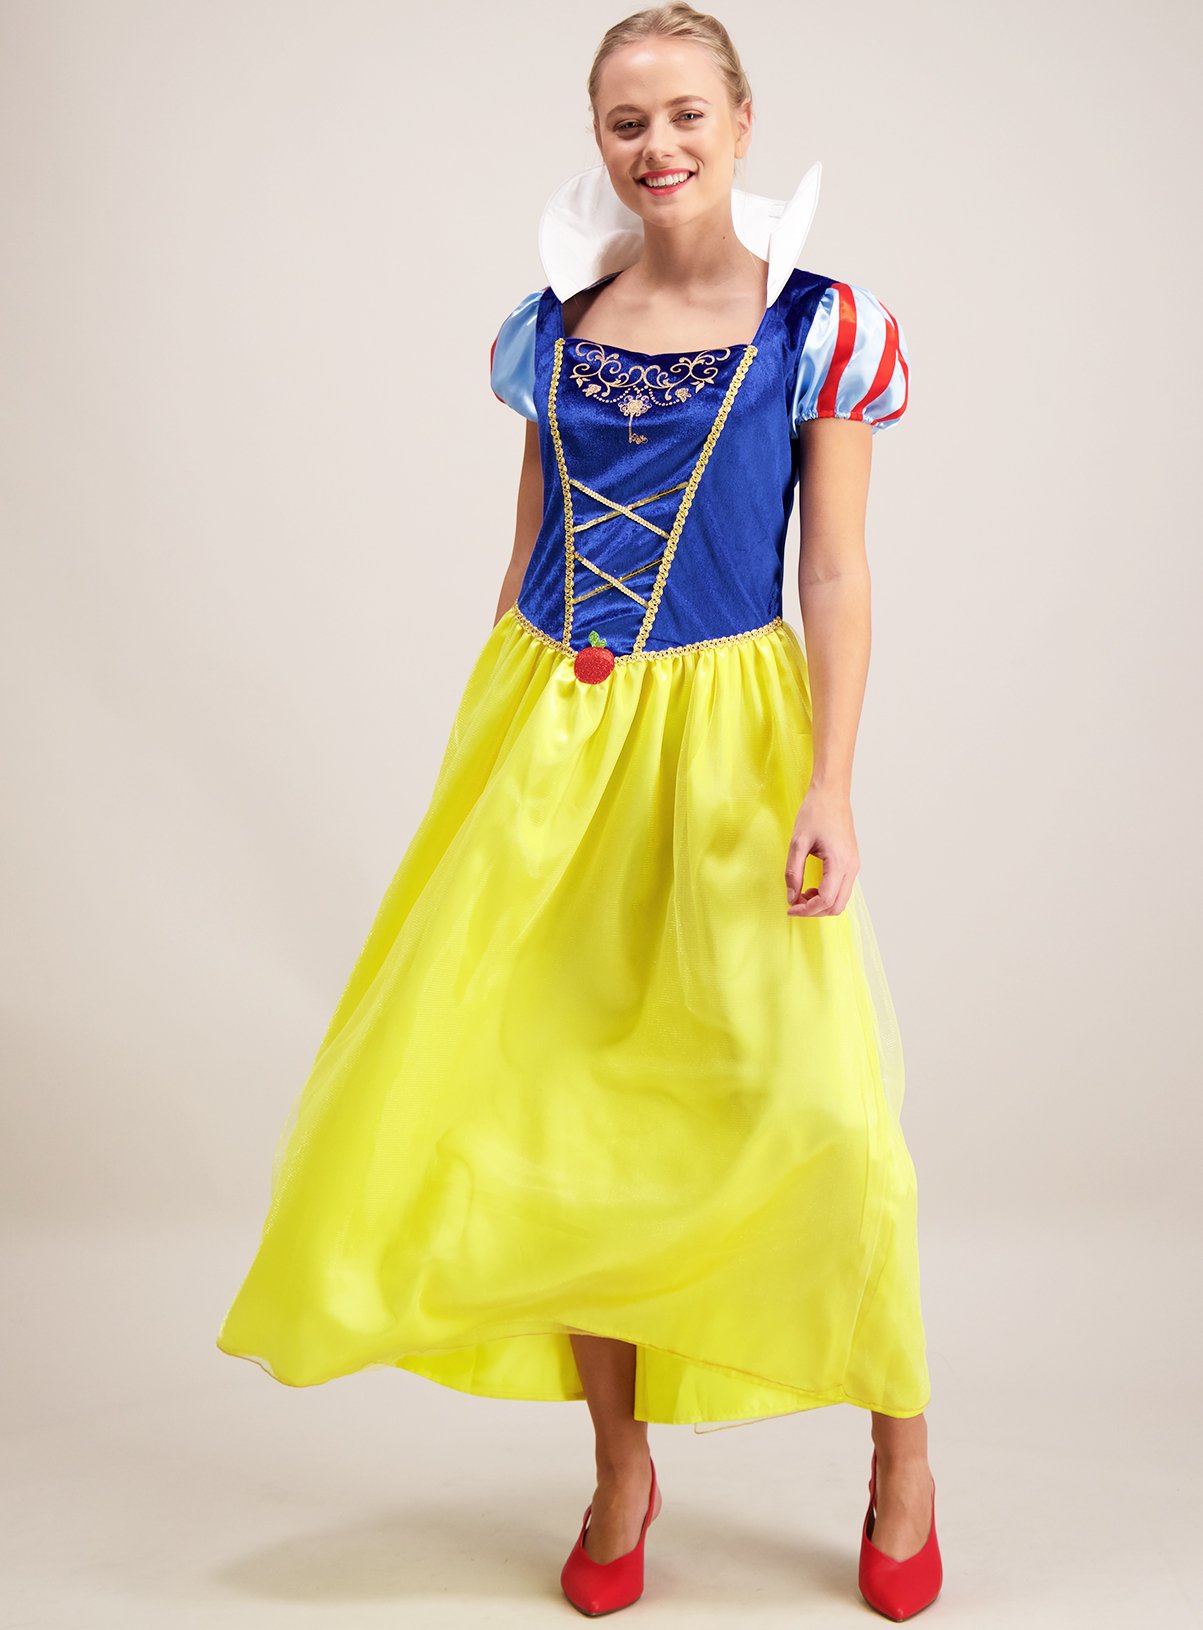 Disney Princess Snow White Yellow Costume Review